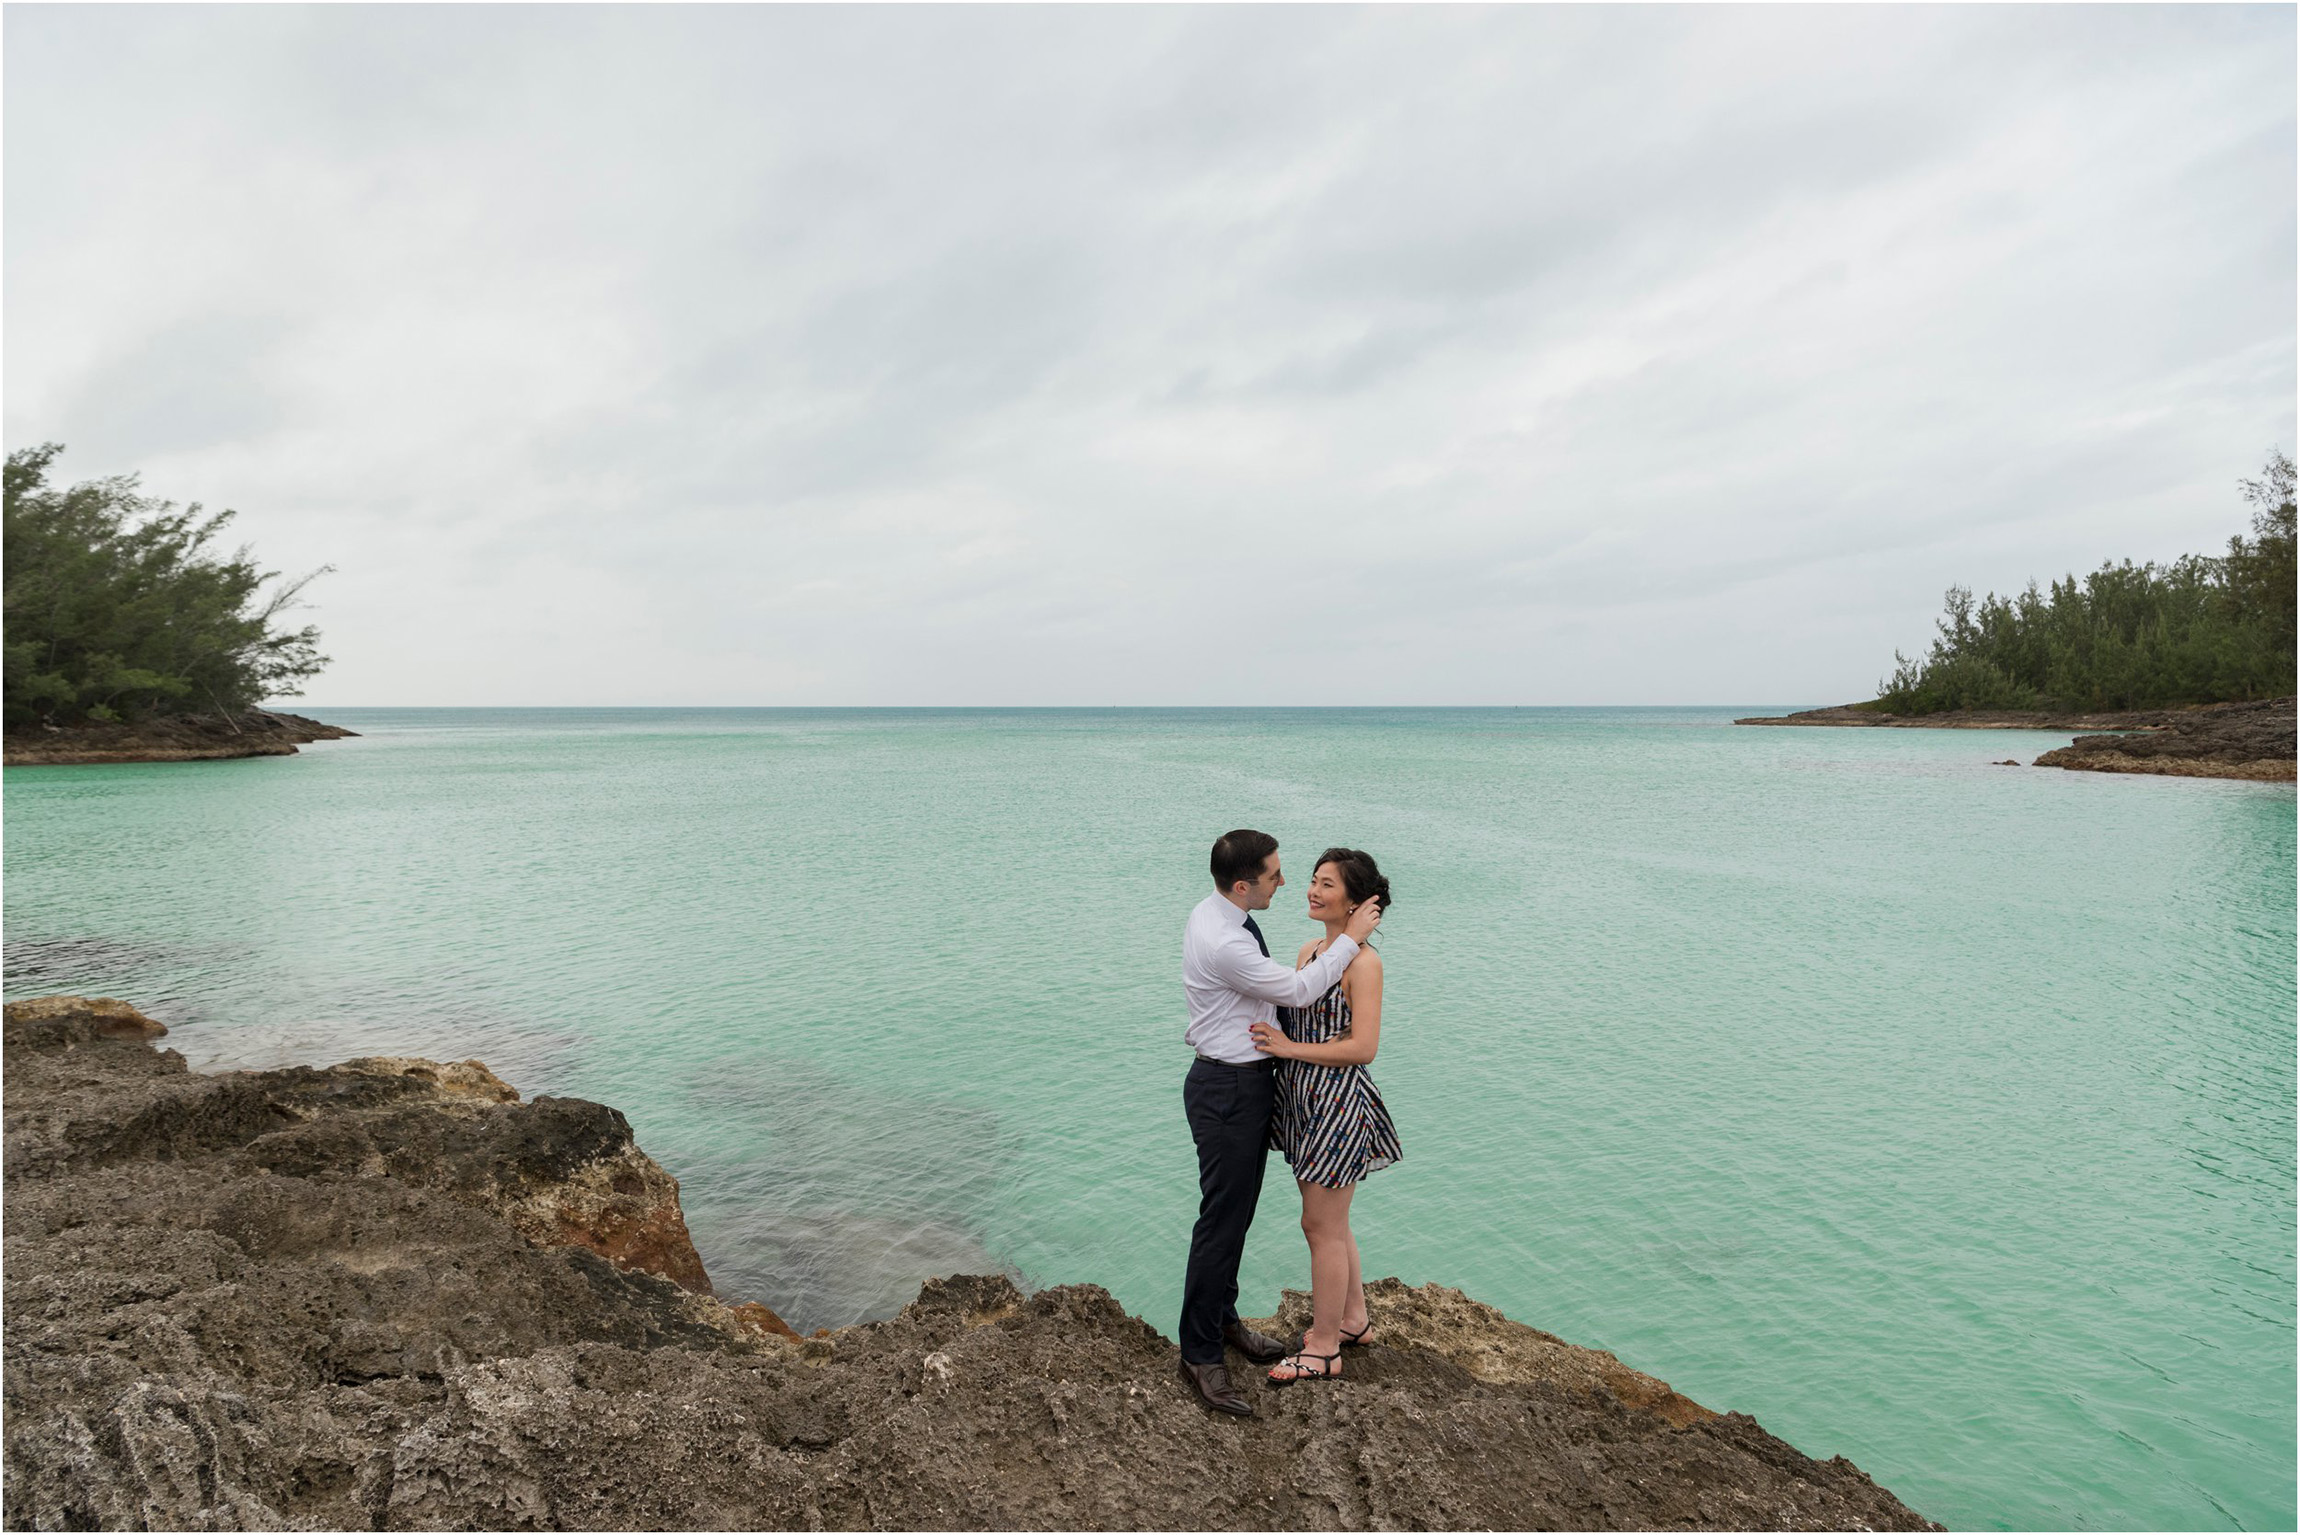 ©FianderFoto_Destination Wedding Photographer_Bermuda_Abbots Cliff_Gibbit Island_Allyn_Zi Ran_002.jpg